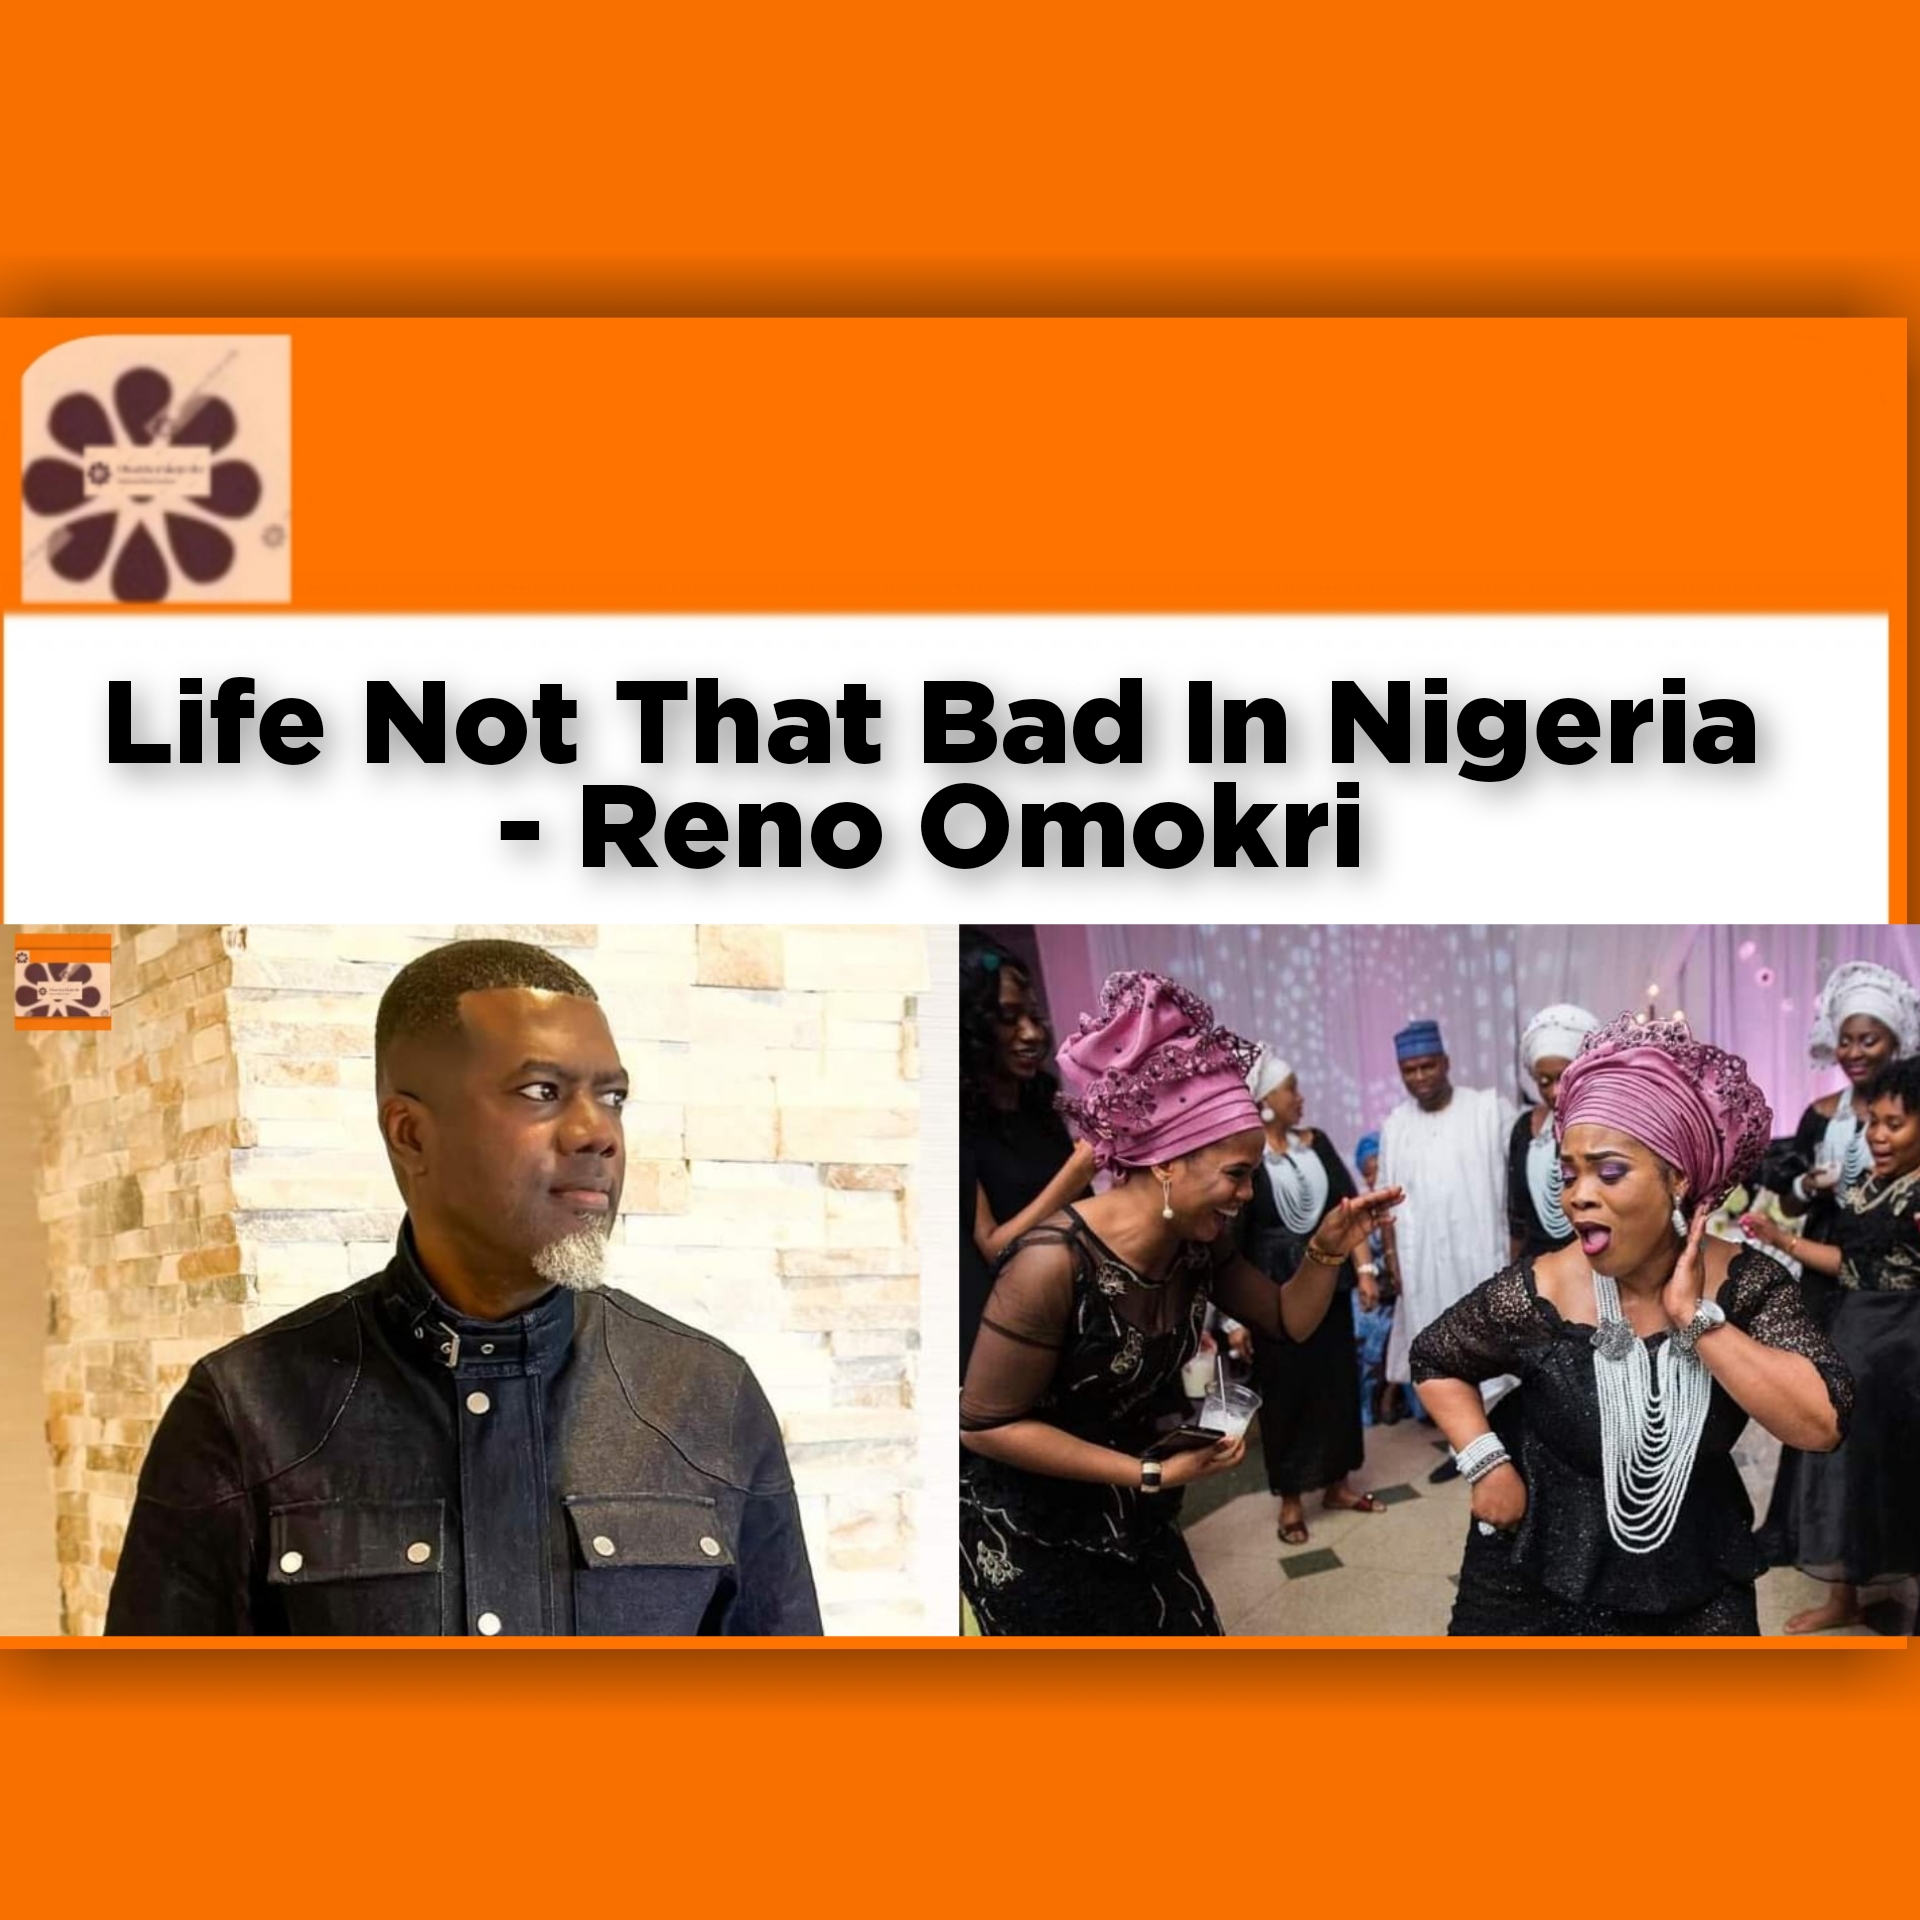 Life Not That Bad In Nigeria - Reno Omokri ~ OsazuwaAkonedo #politics